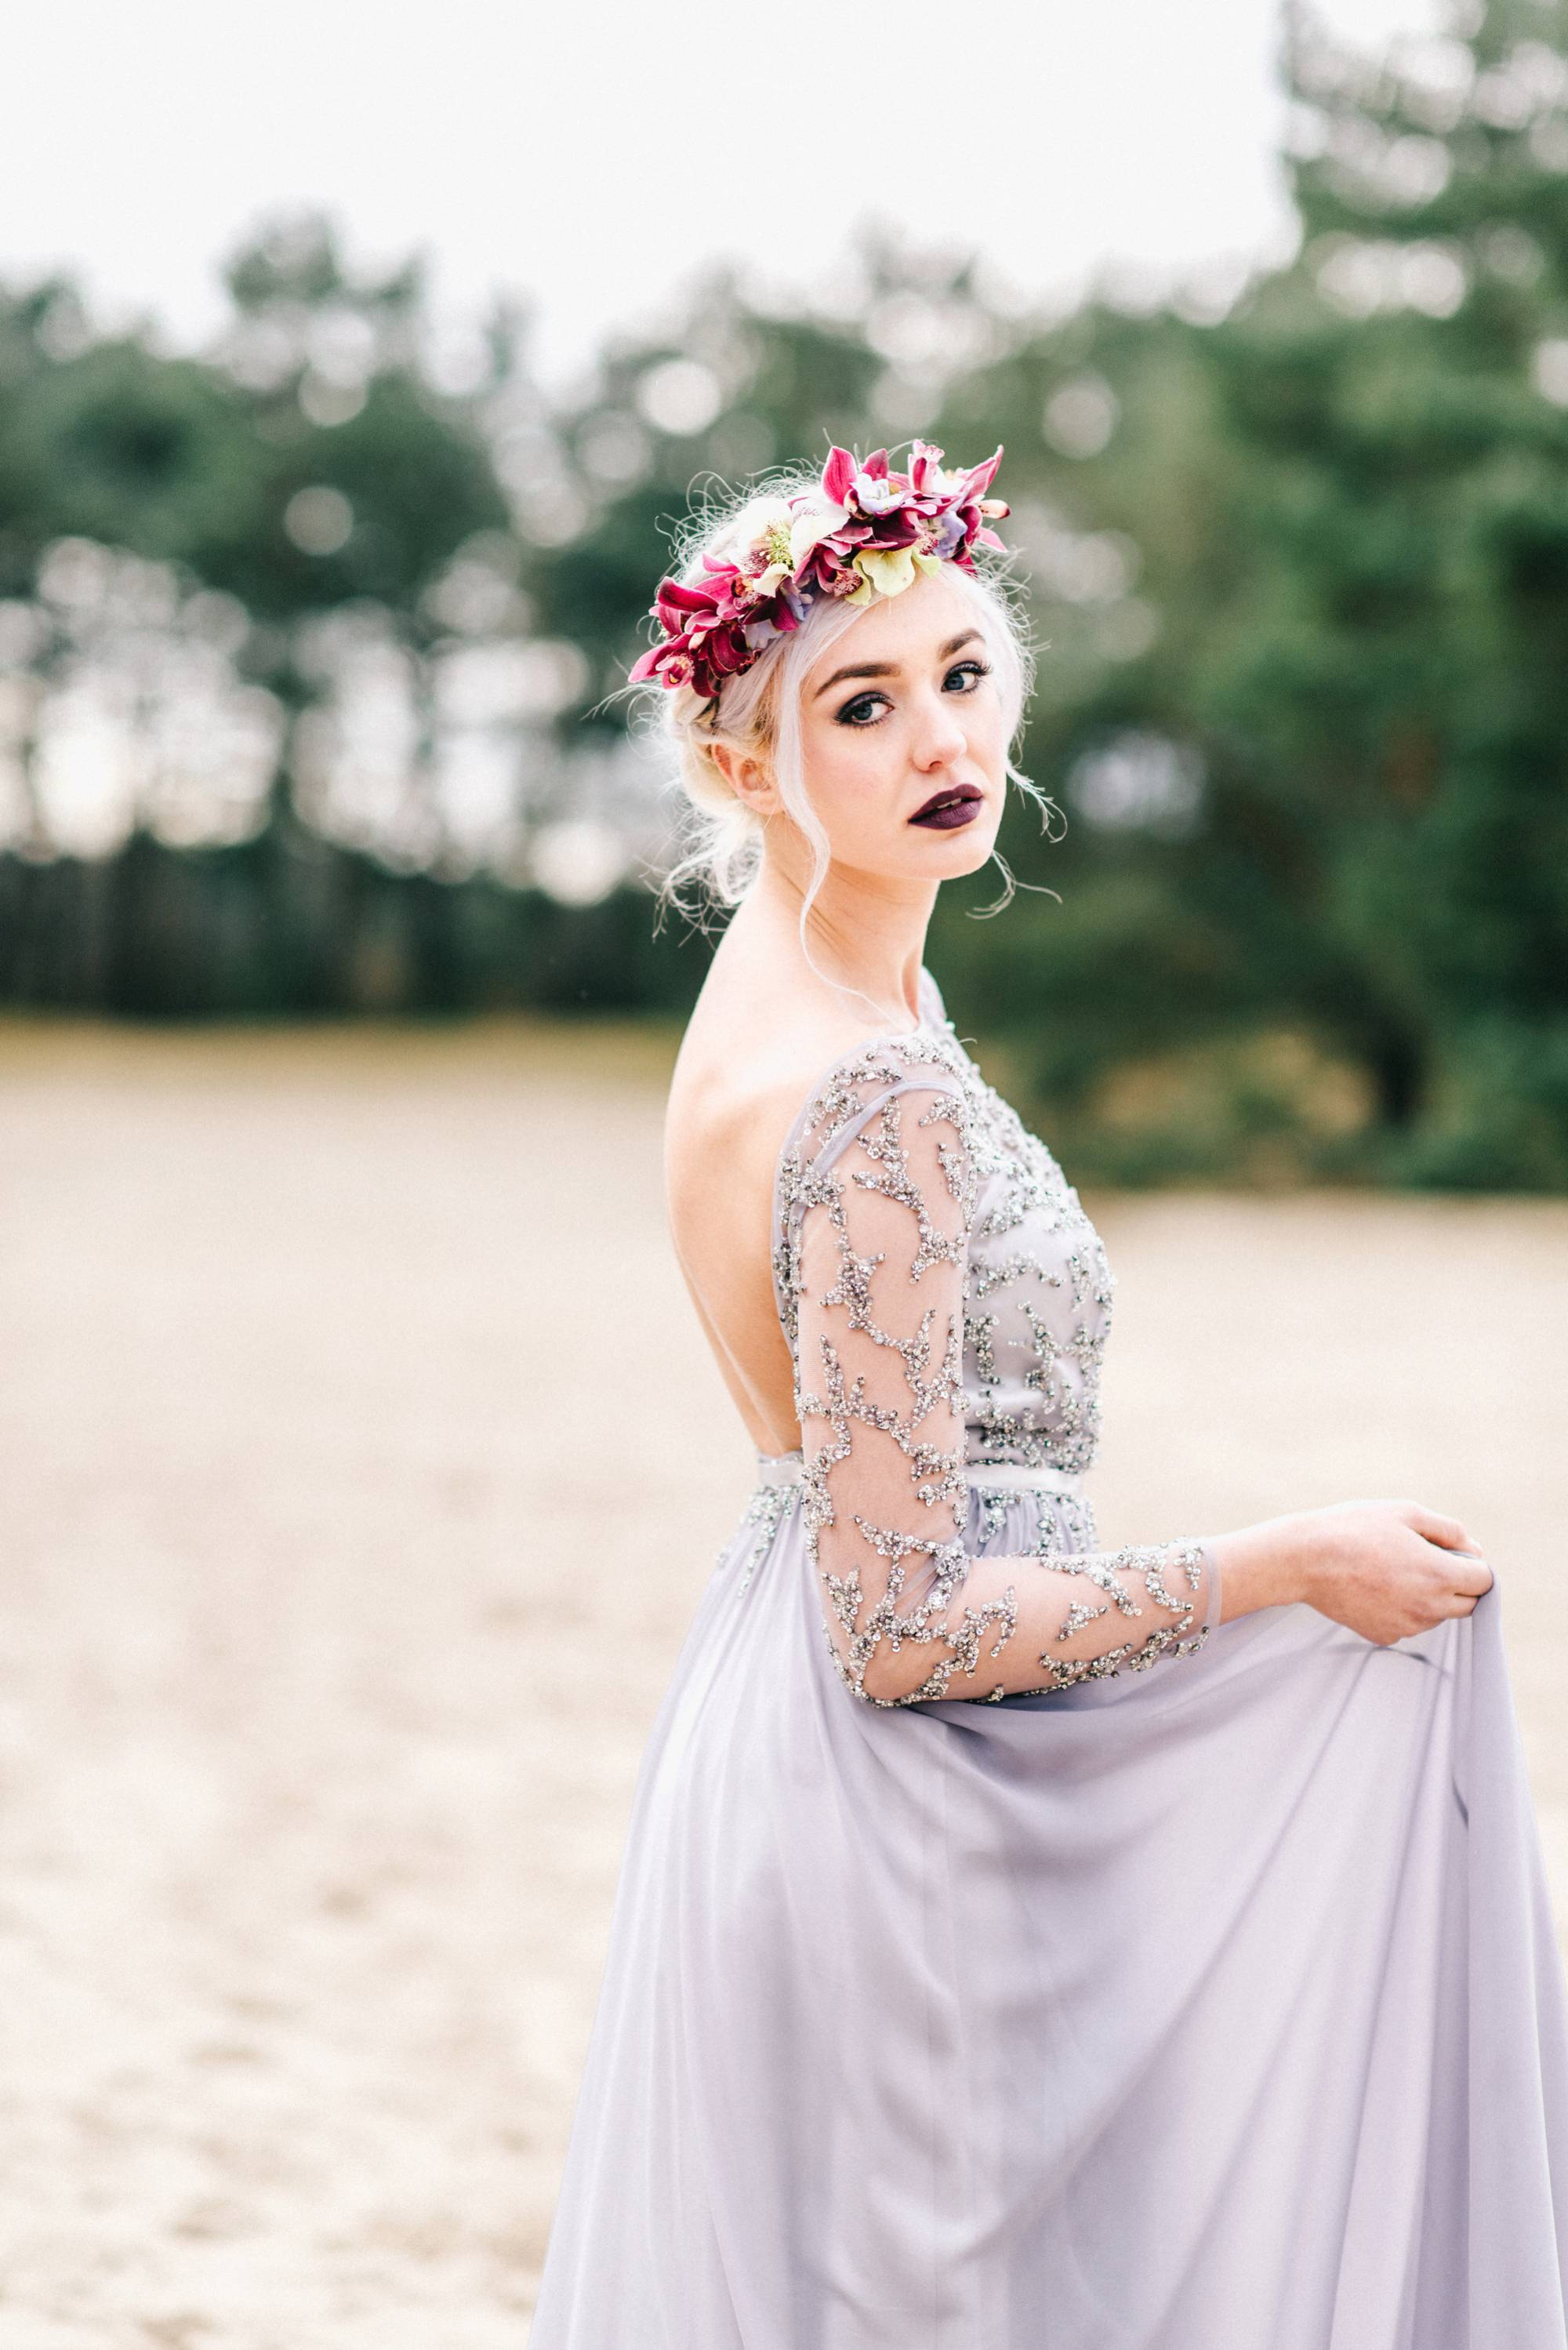 Wedding photographer Netherlands - Pastel weddingdress